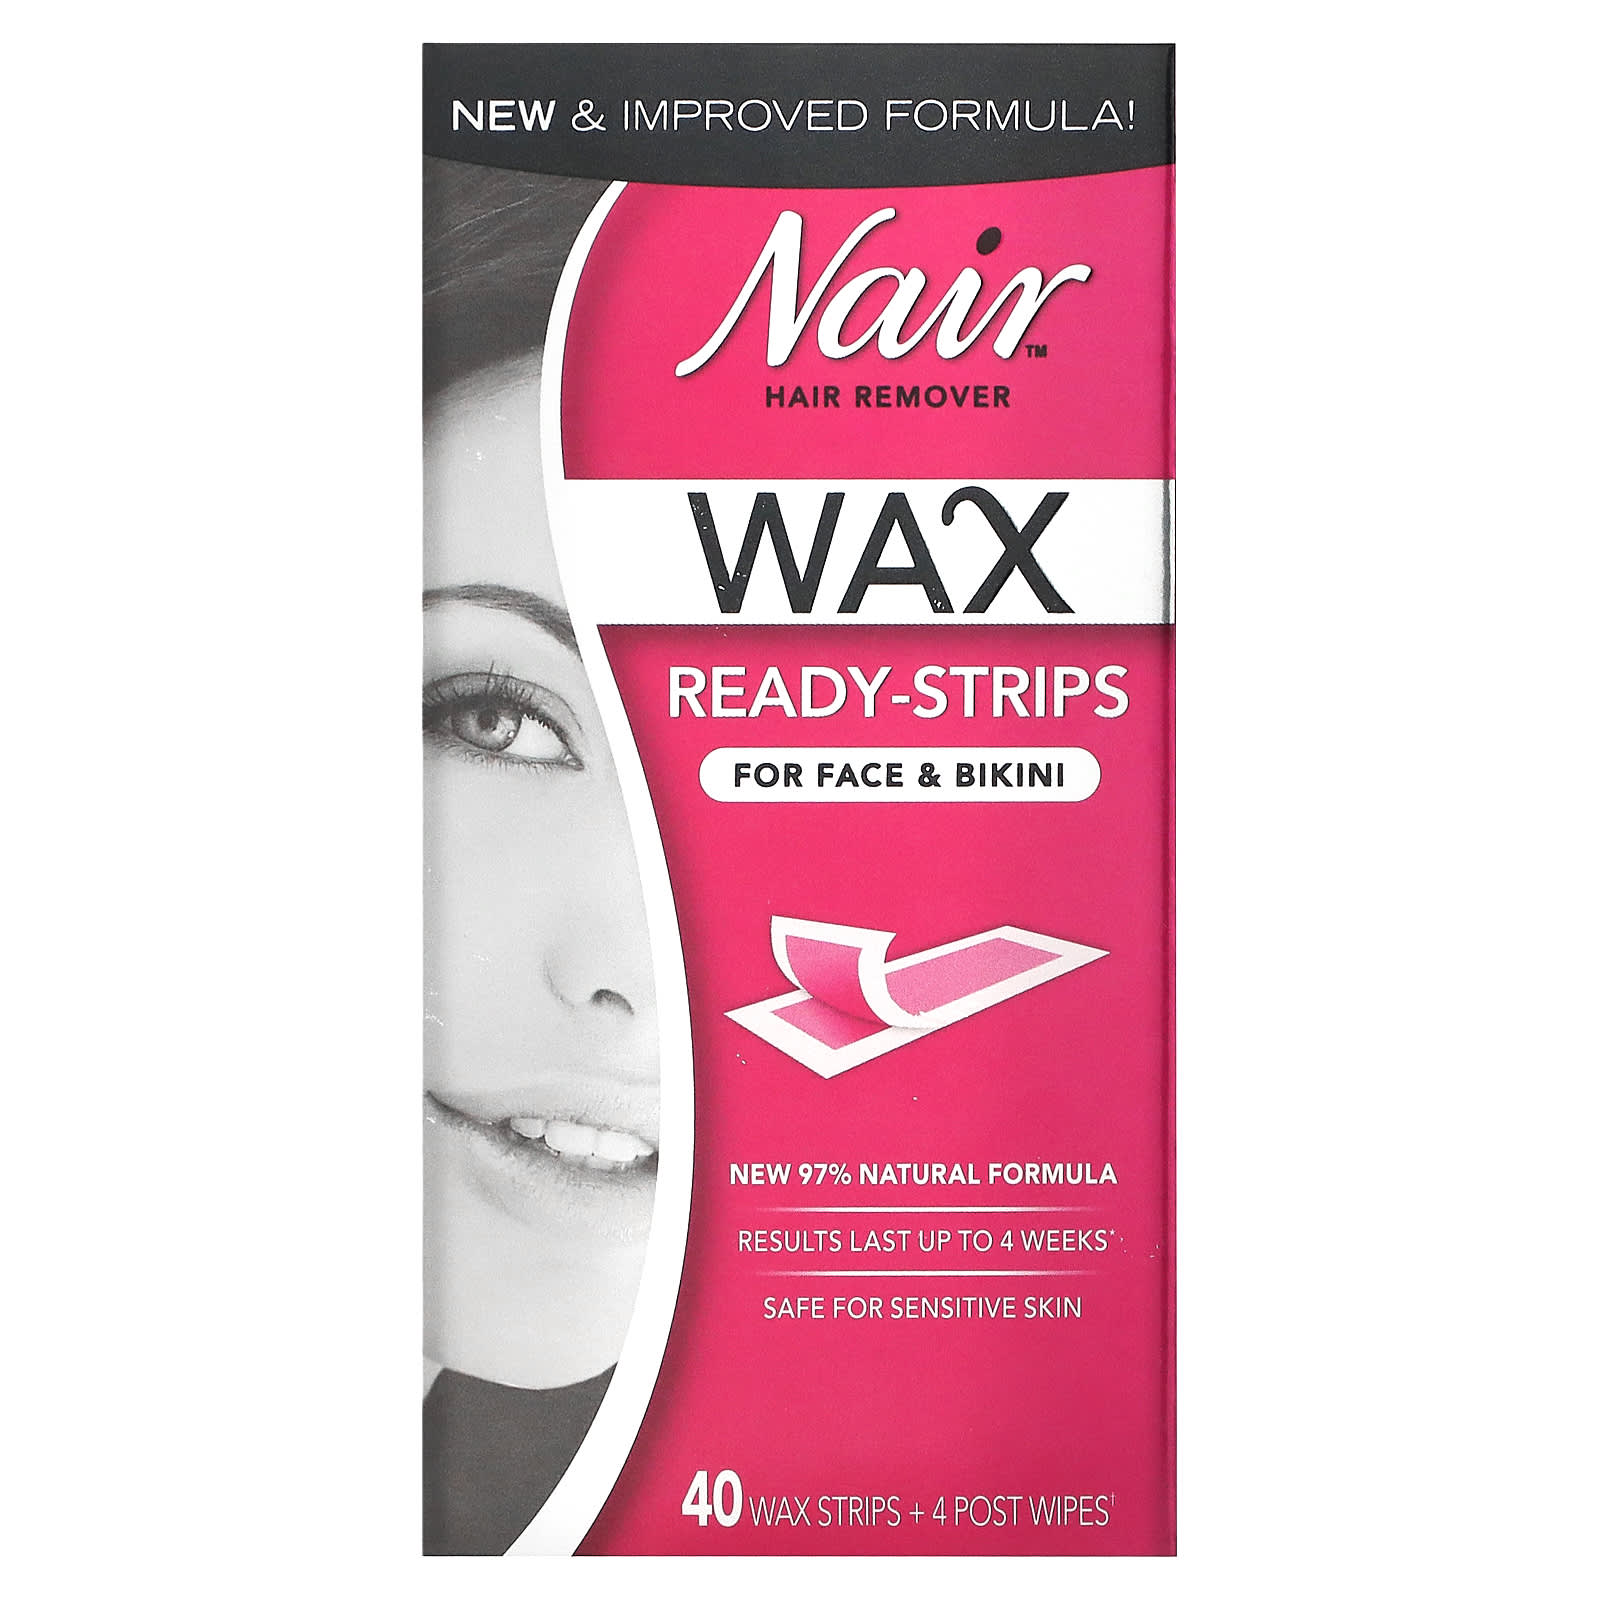 Nair, Hair Remover, Wax Ready-Strips, For Face & Bikini, 40 Wax Strips + 4  Post Wipes